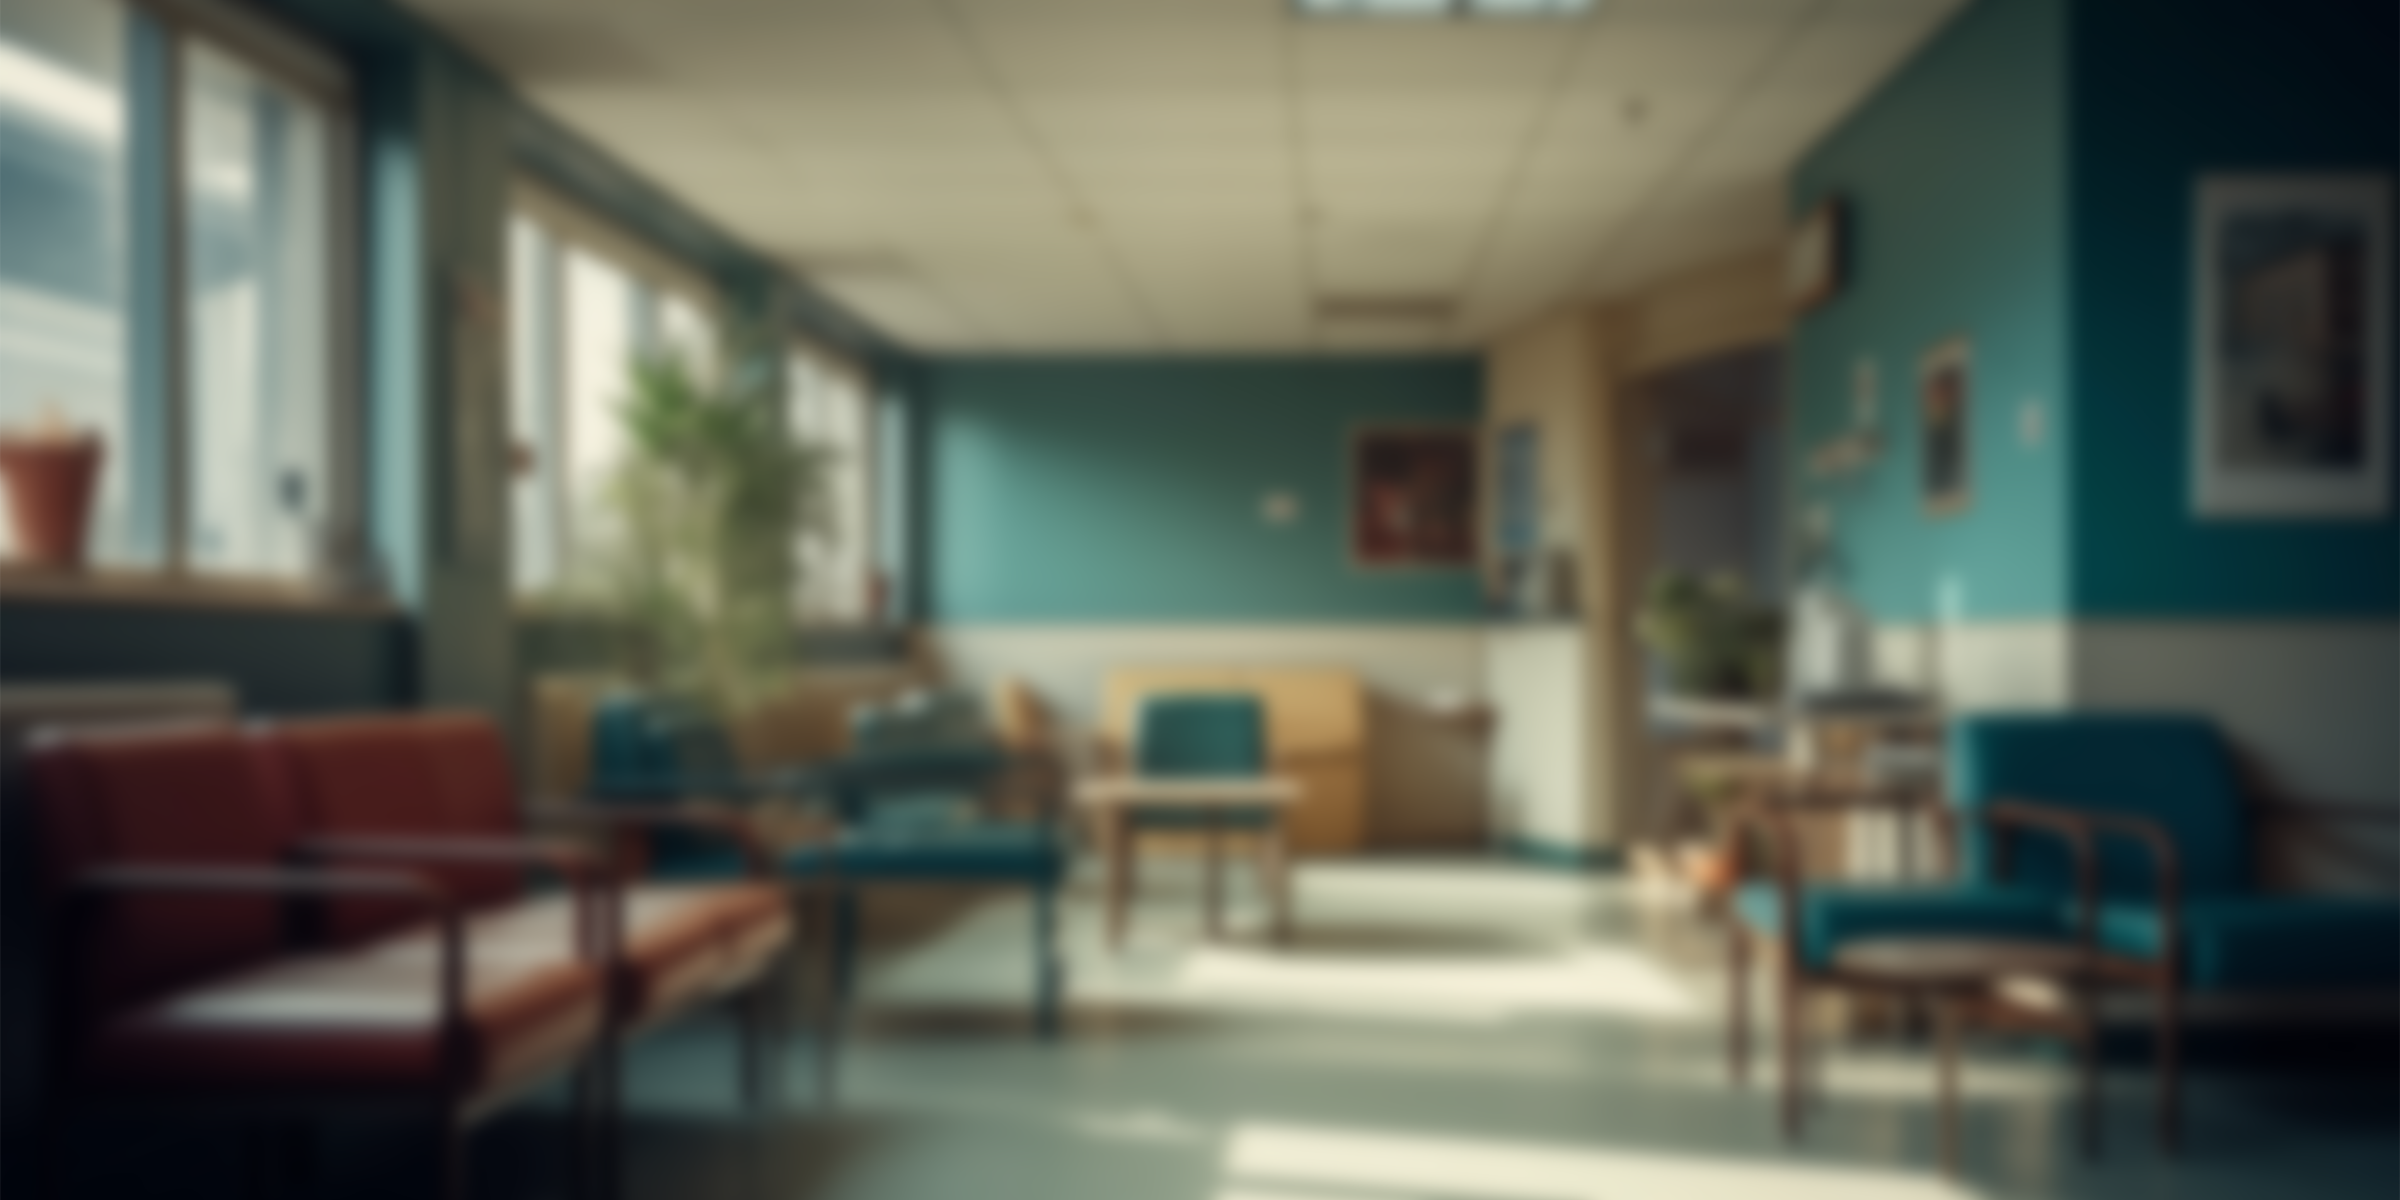 jamisumi-HOUSE Hospital-Waiting-Room-Blurred-2400x1200px